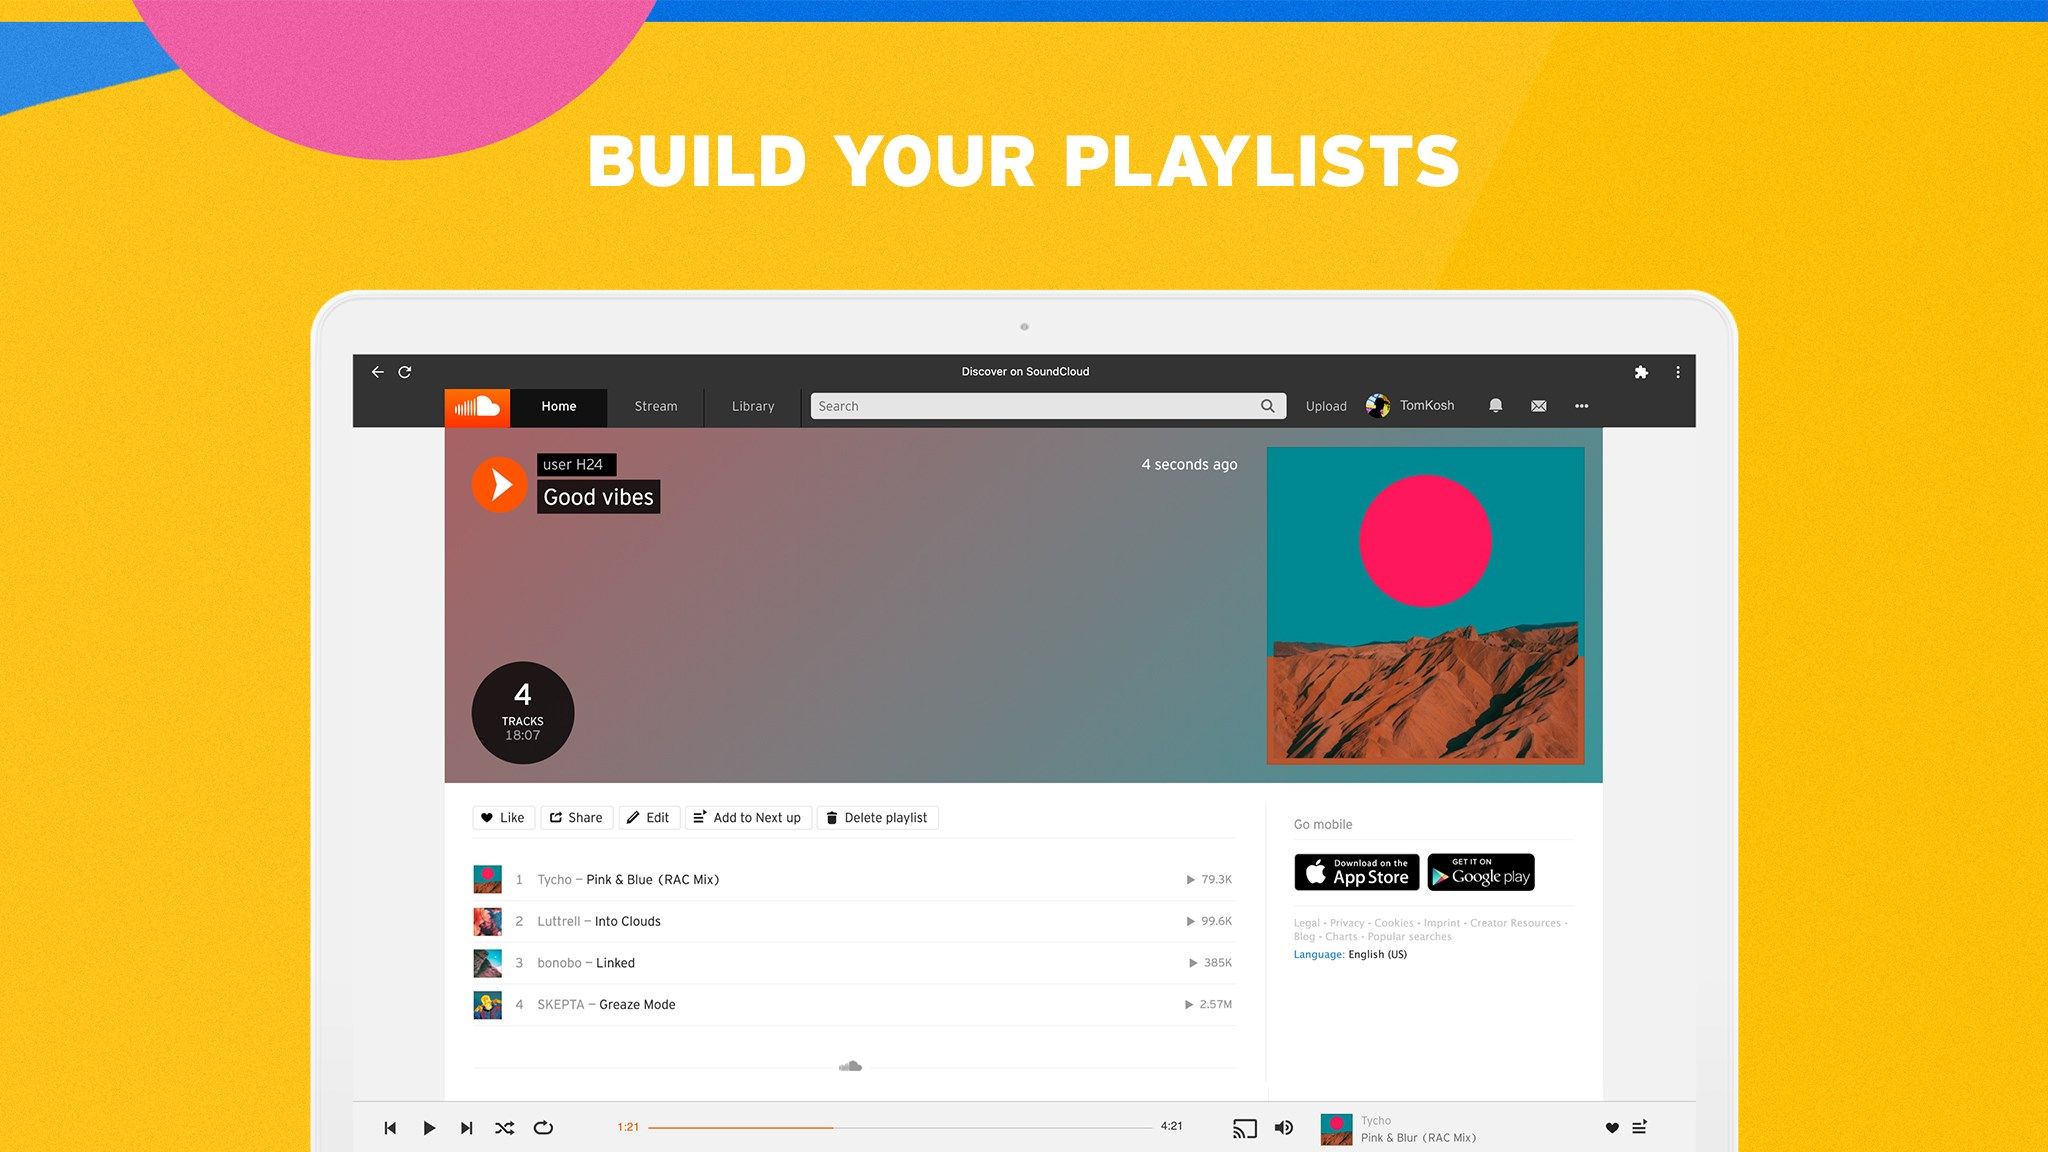 Build your playlists